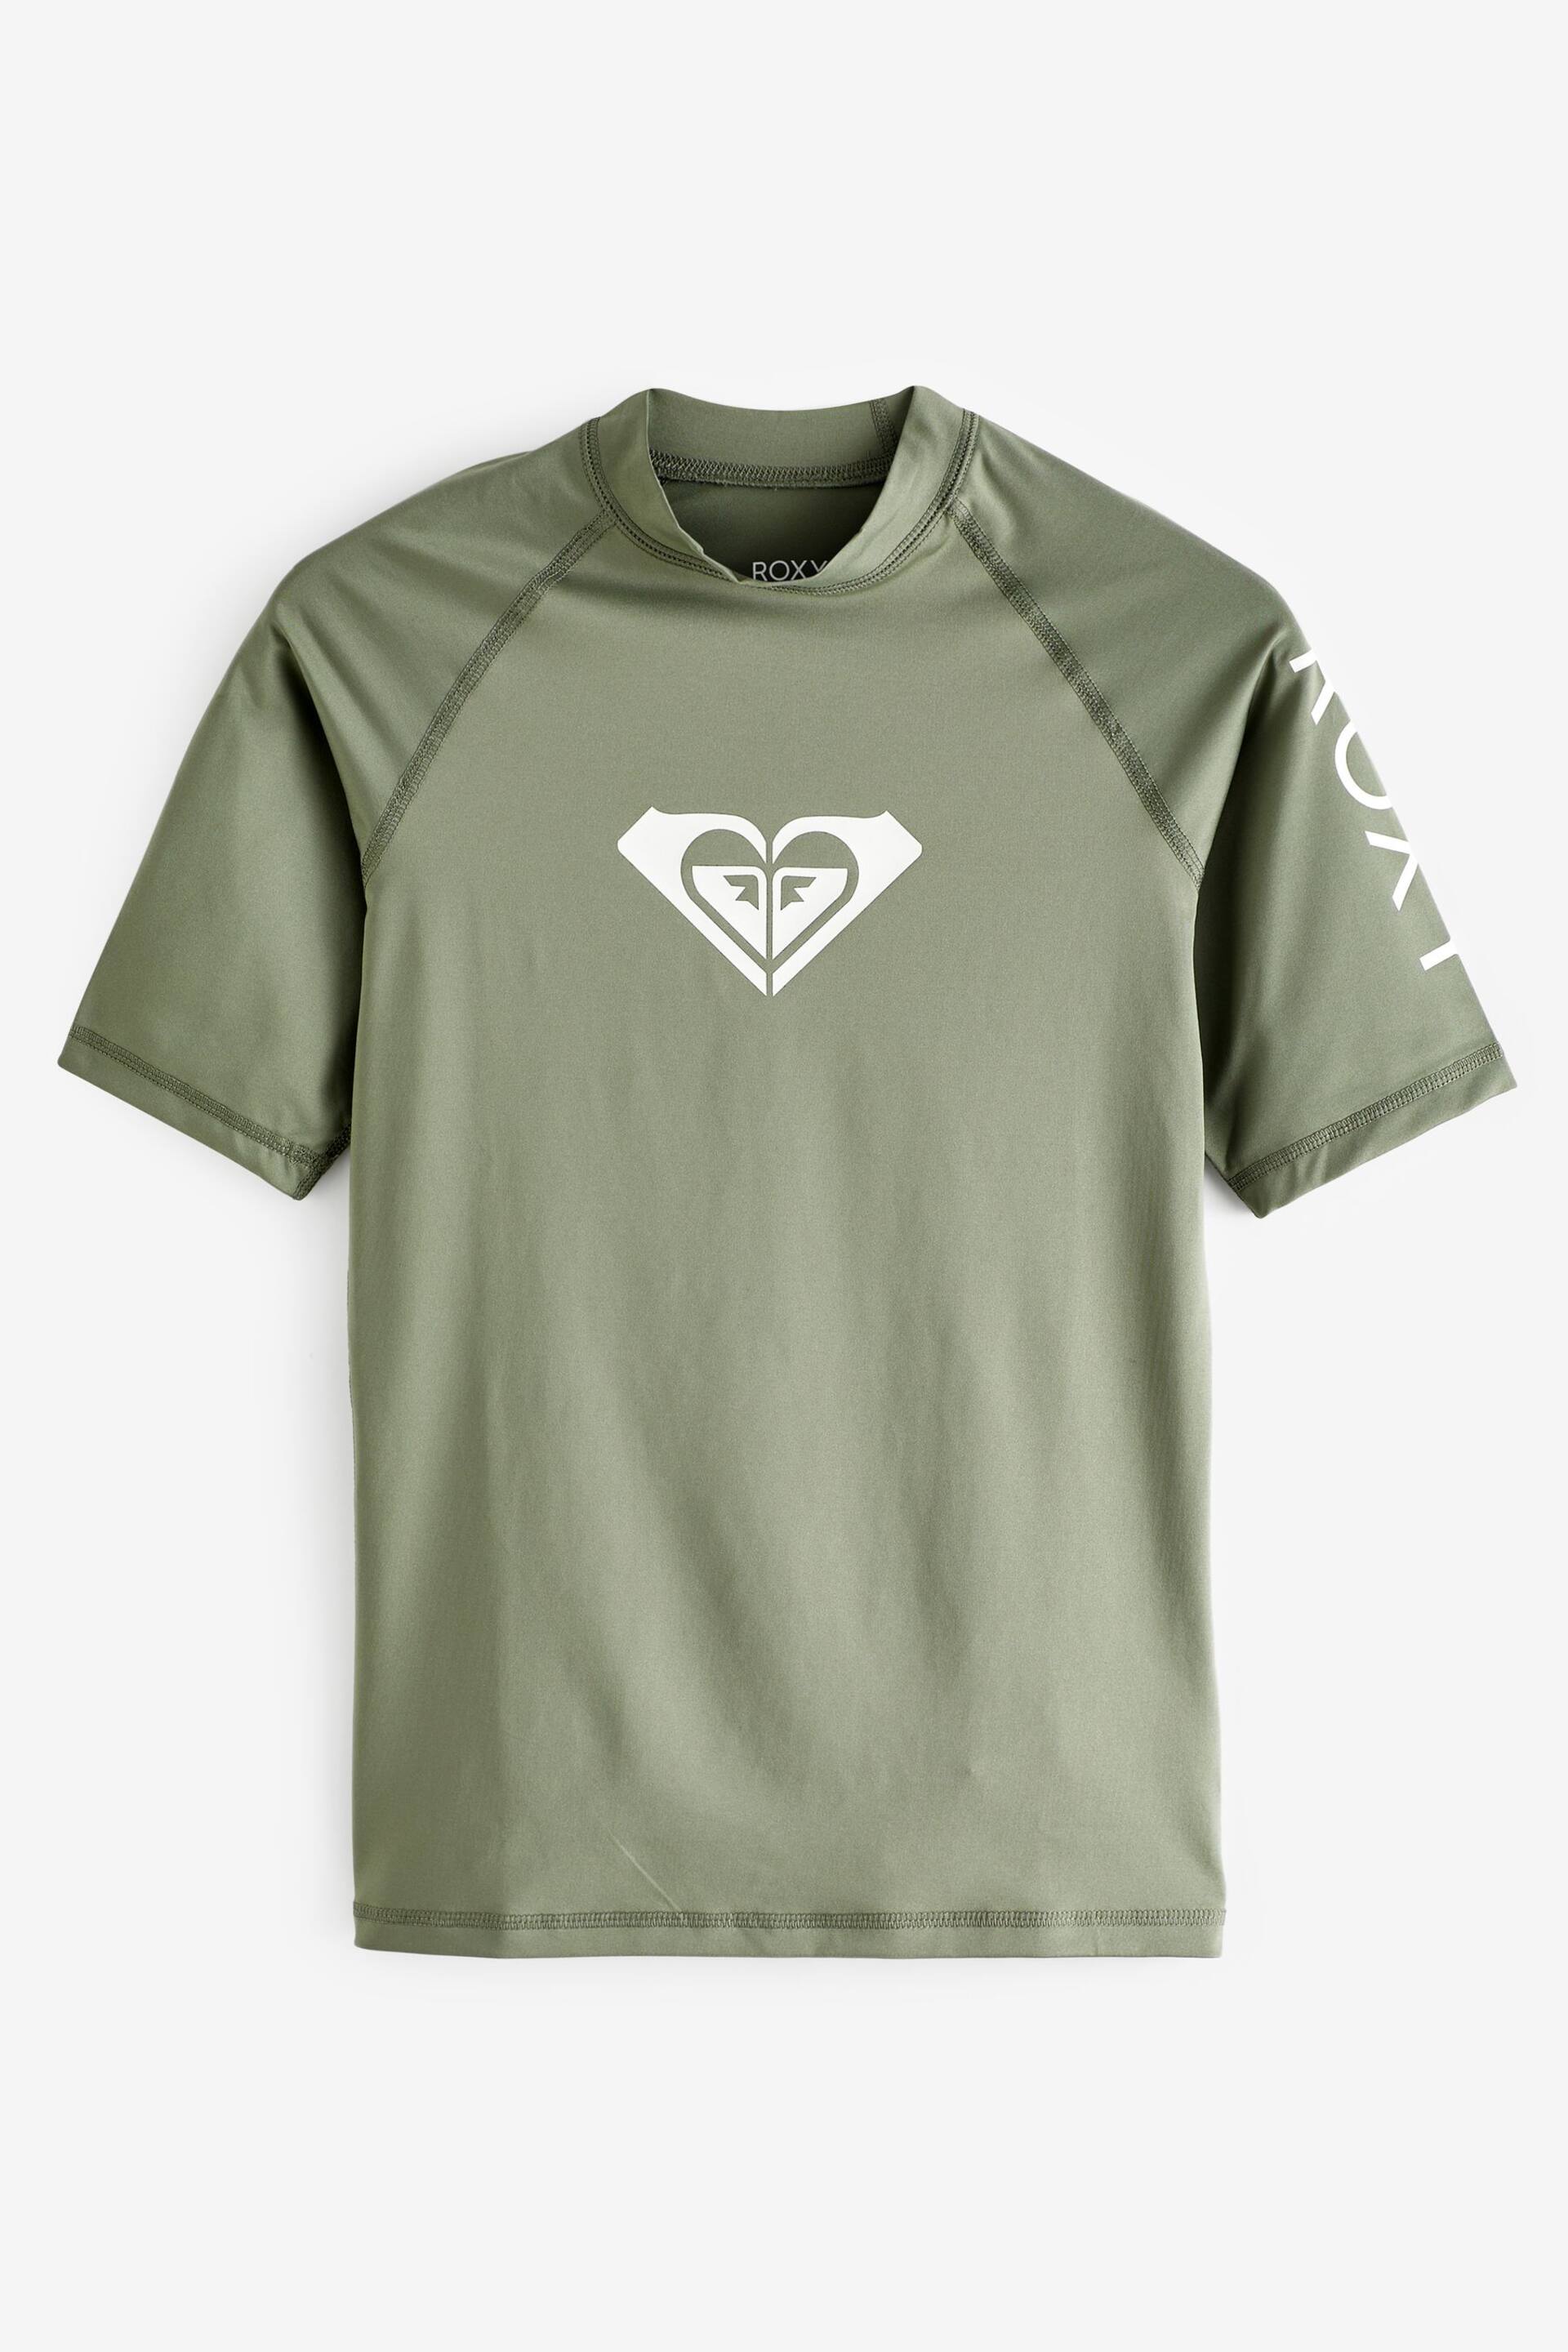 Roxy Whole Hearted Short Sleeve Rash T-Shirt - Image 6 of 6